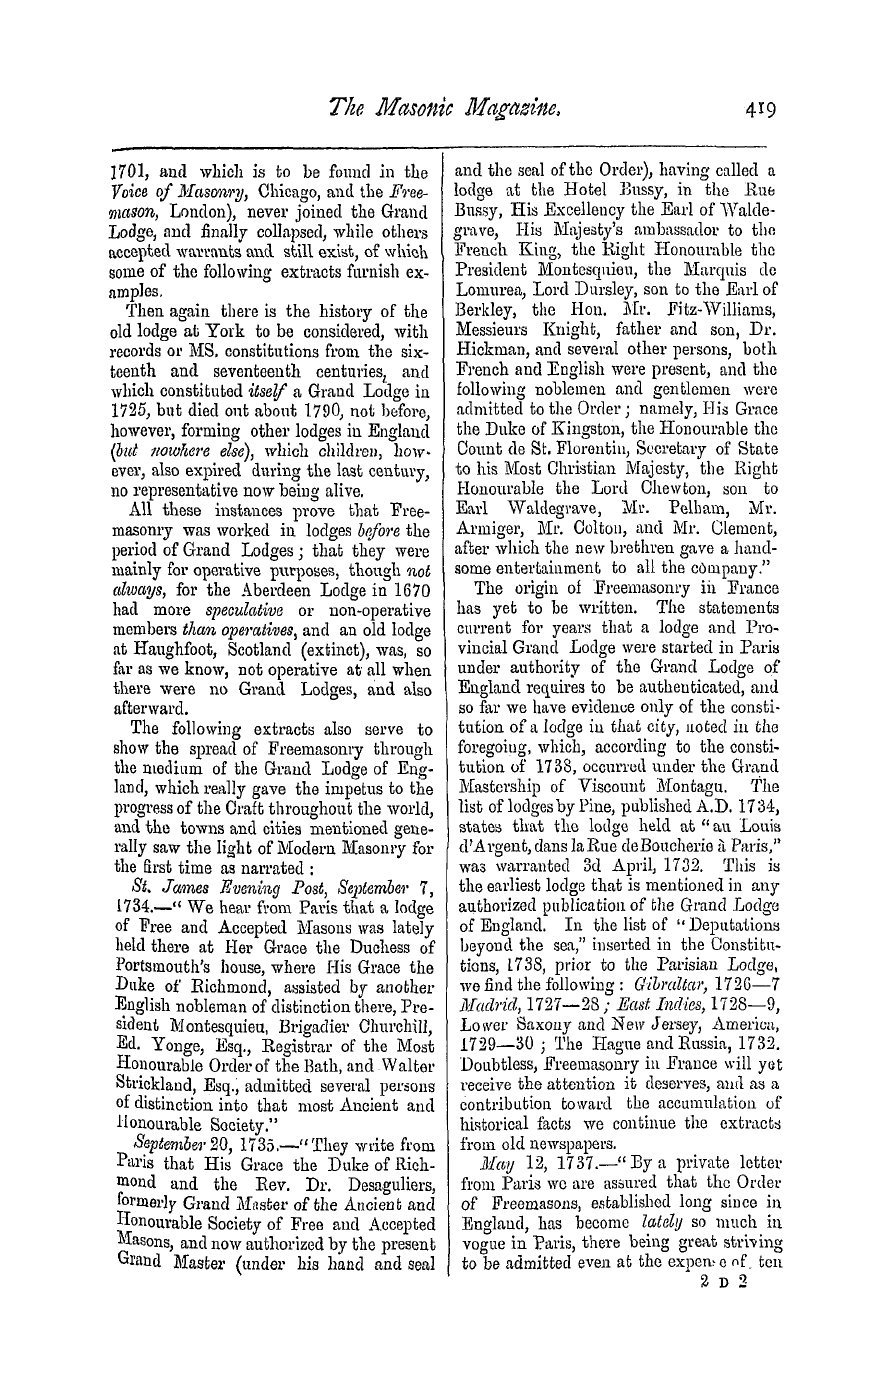 The Masonic Magazine: 1877-02-01 - Letter Of Bro. W. J. Hughan, Of England, To The Grand Lodge Uf Ohio.